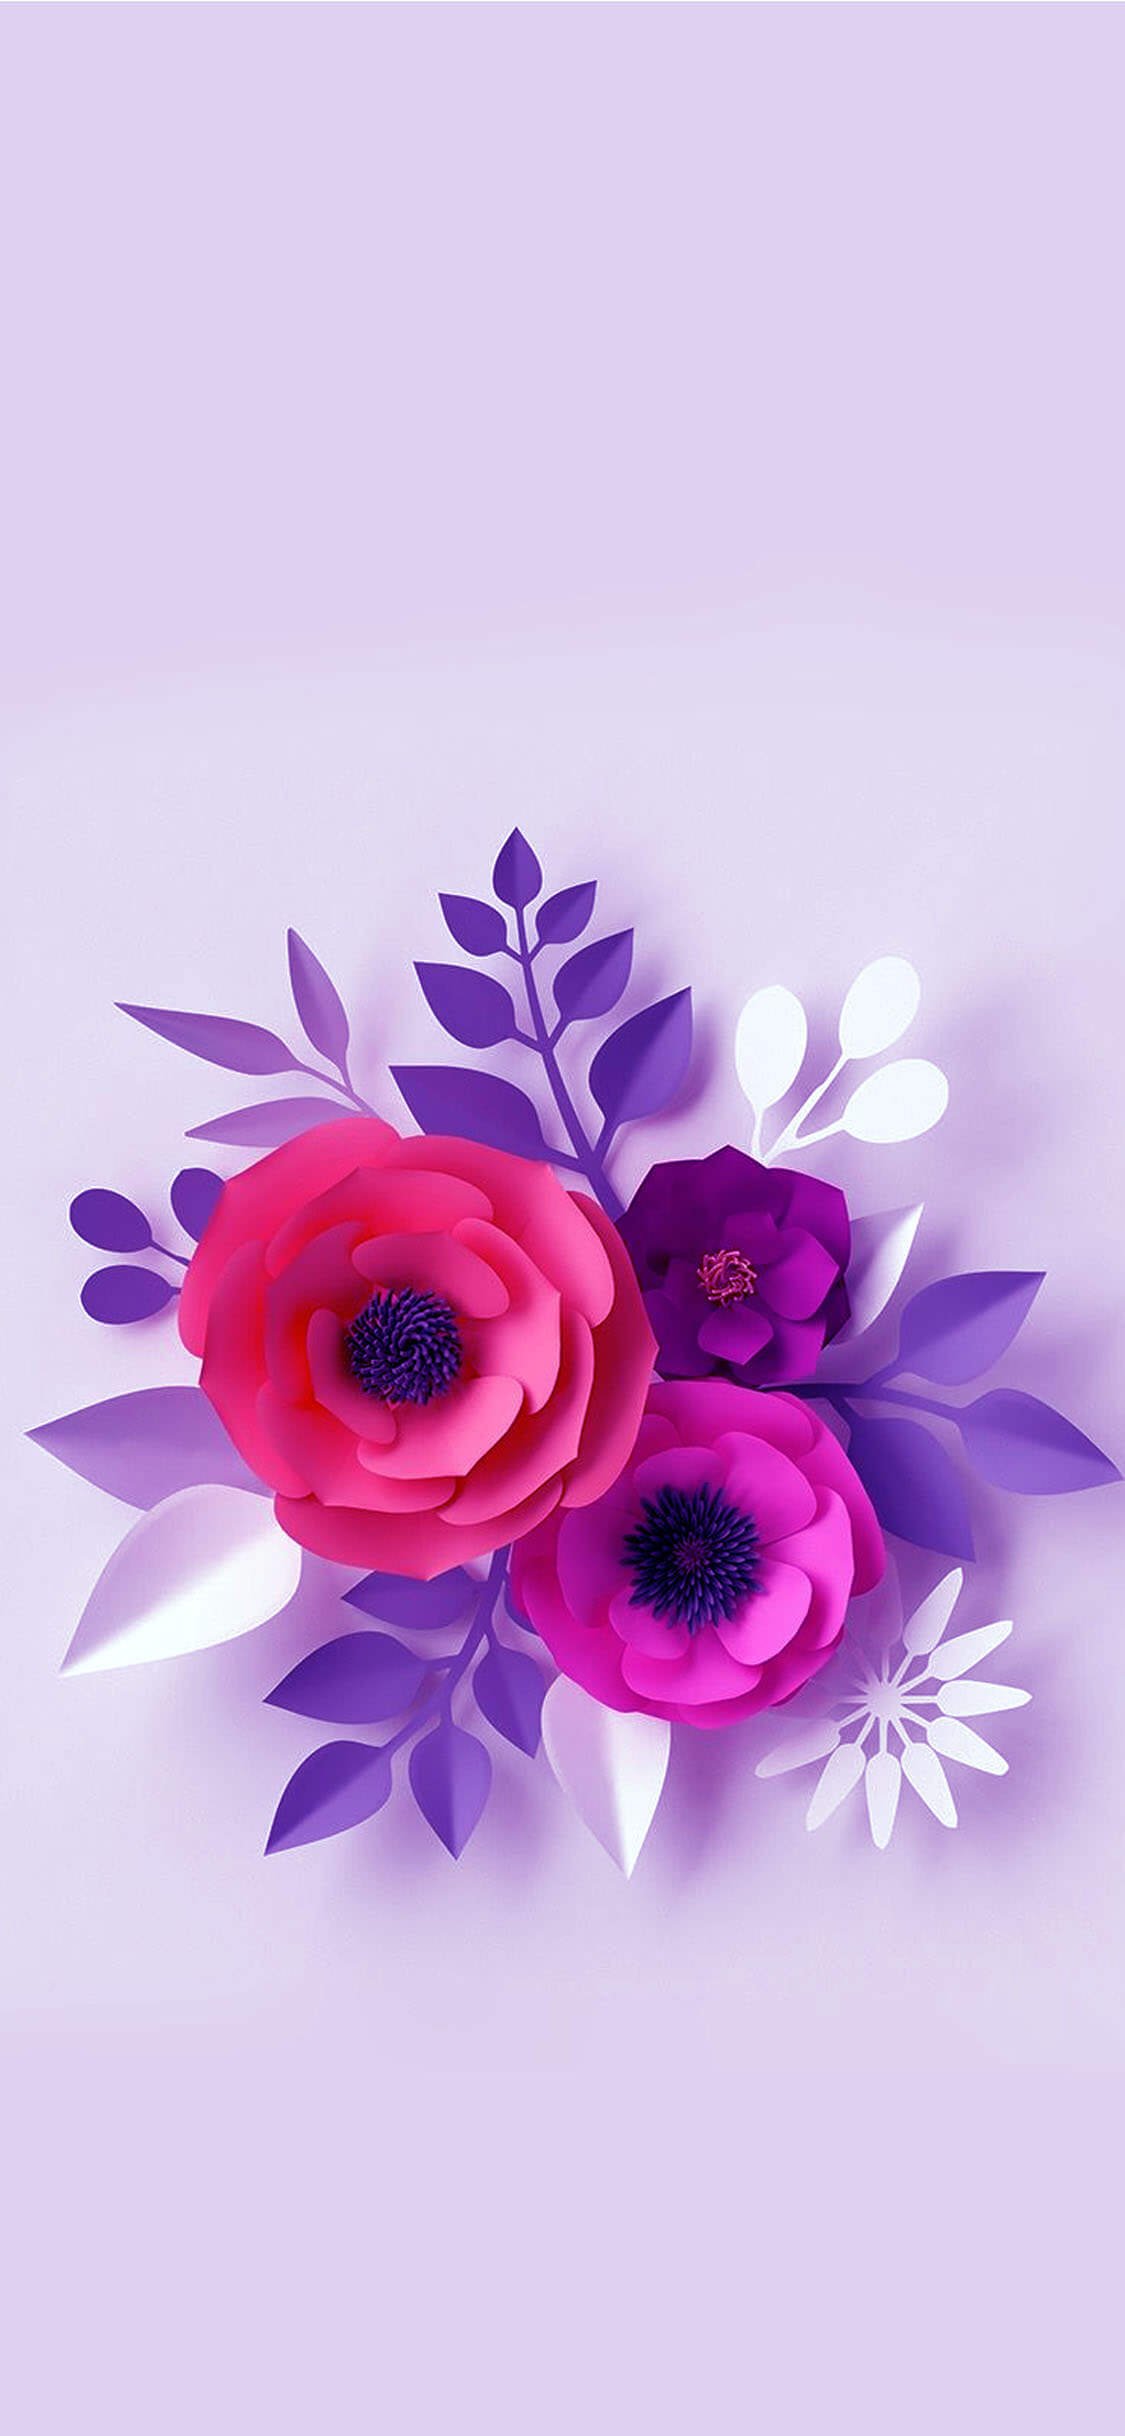 orange and purple flowers background